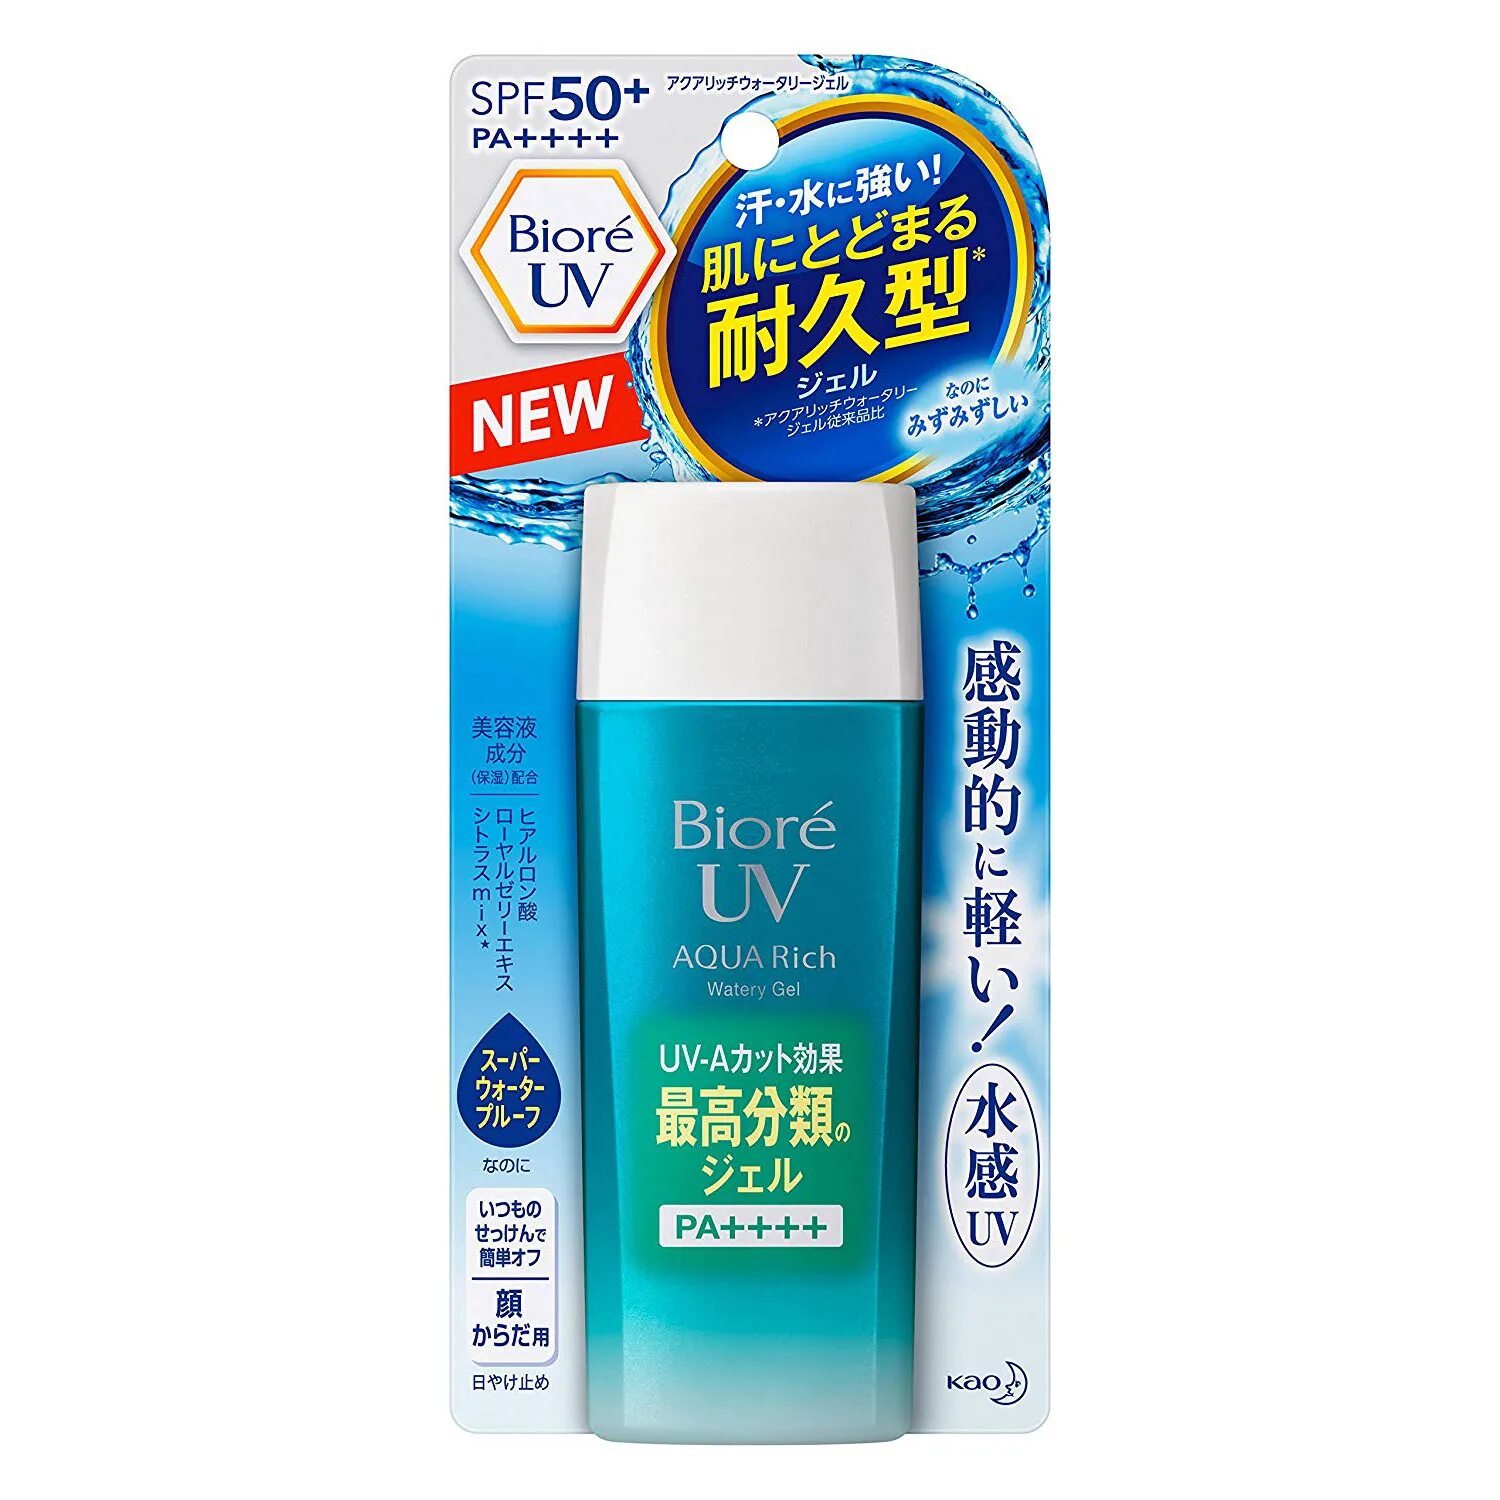 Biore UV SPF 50. Крем СПФ 50 Biore. Солнцезащитный крем Biore UV 50. Biore UV Aqua Rich watery.